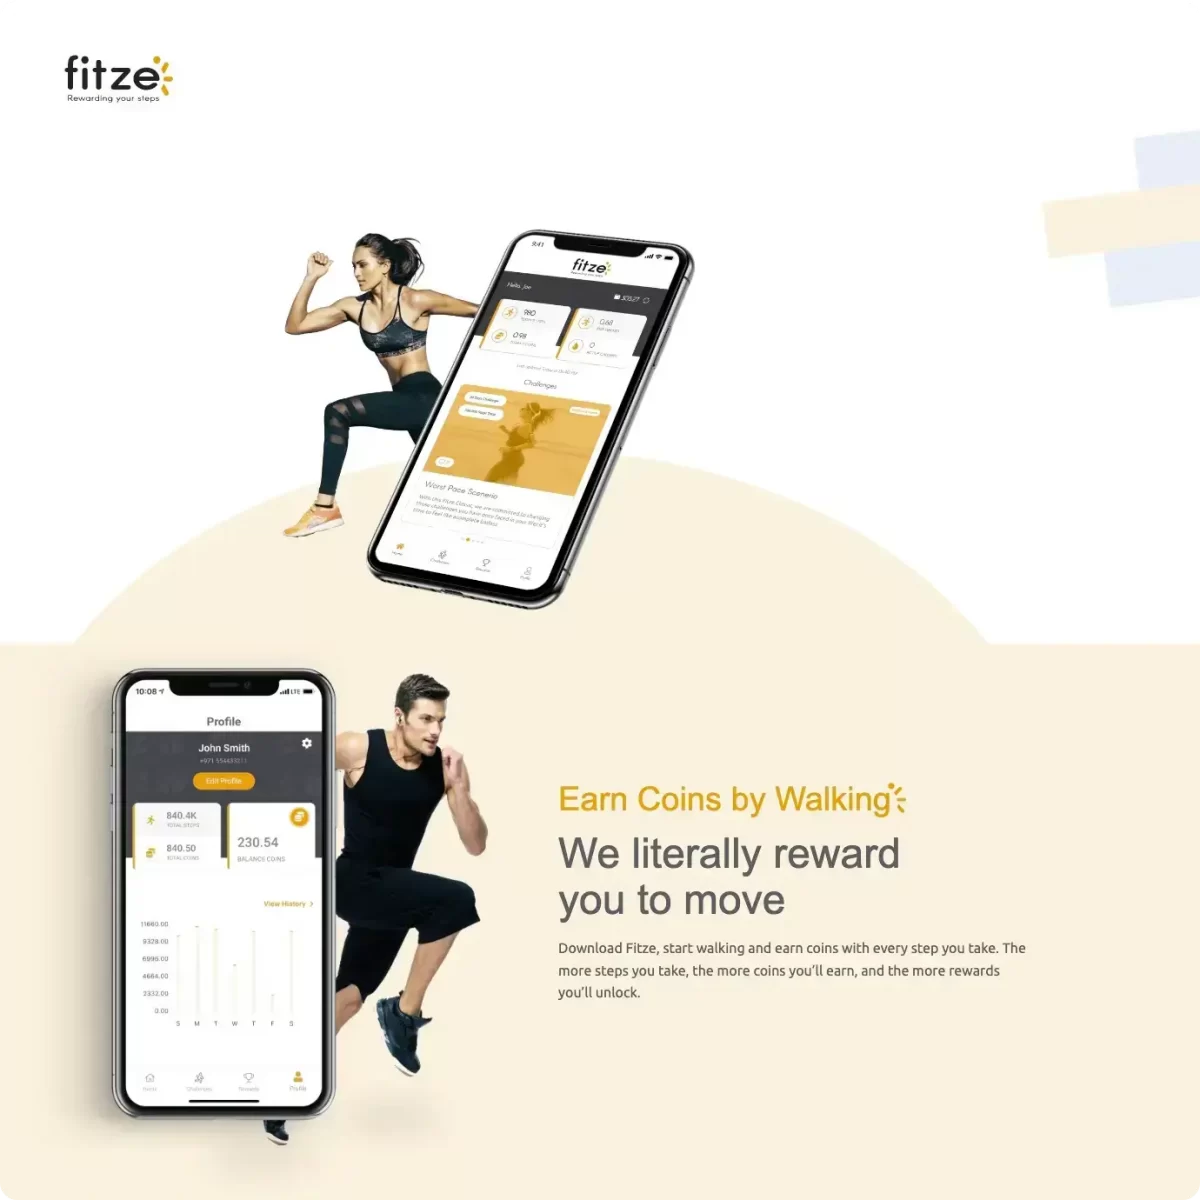 Conceptualised, designed and developed a UAE-based fitness rewards app